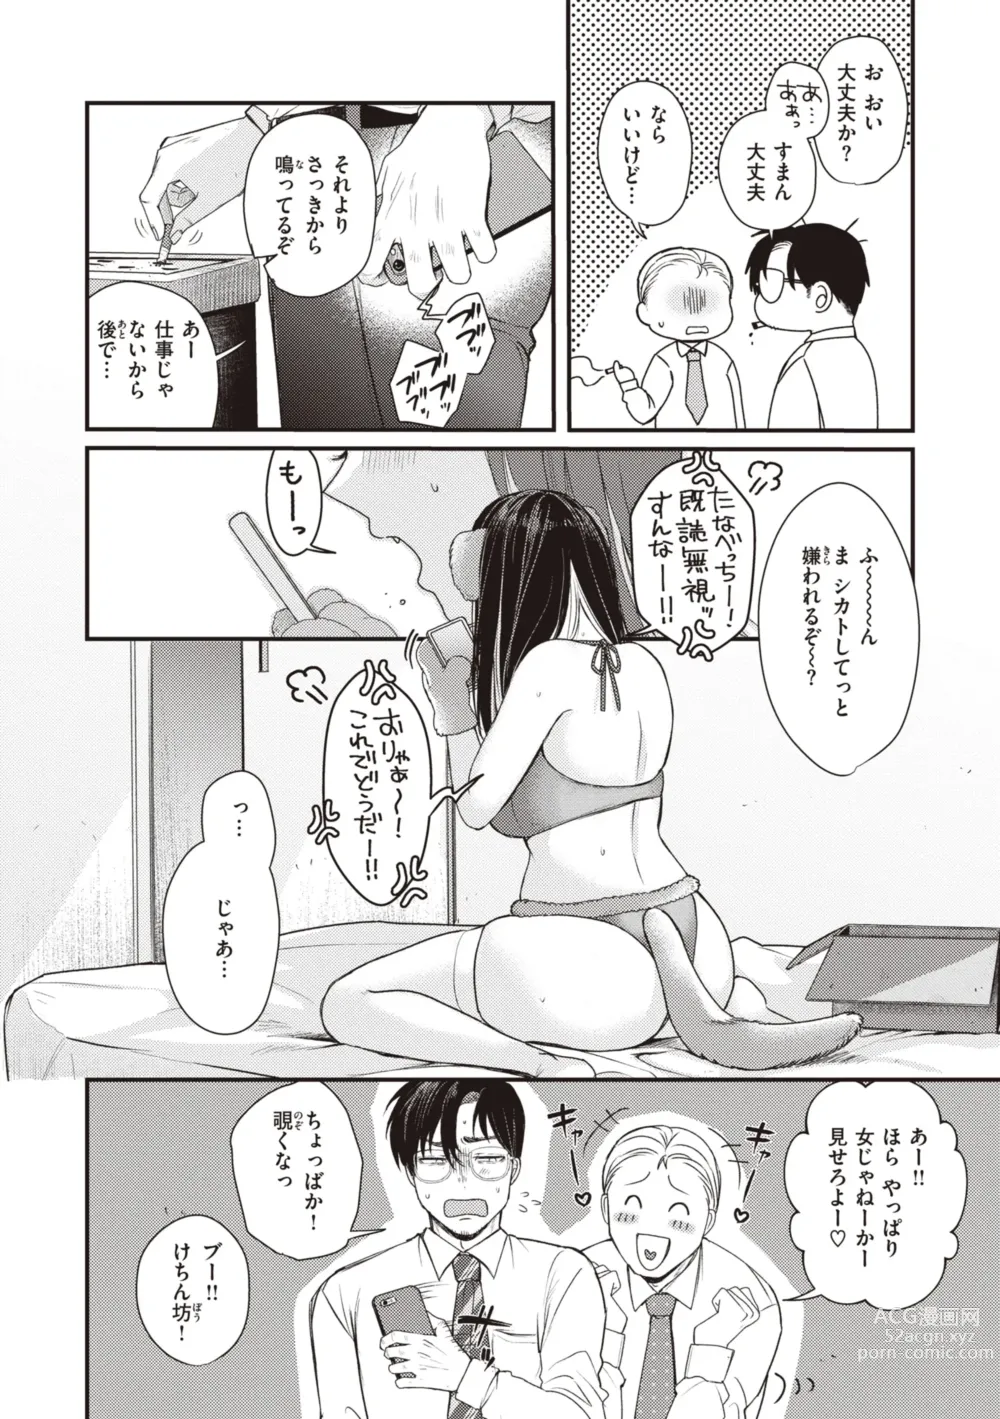 Page 164 of manga Seishun -Sexual Seasons-